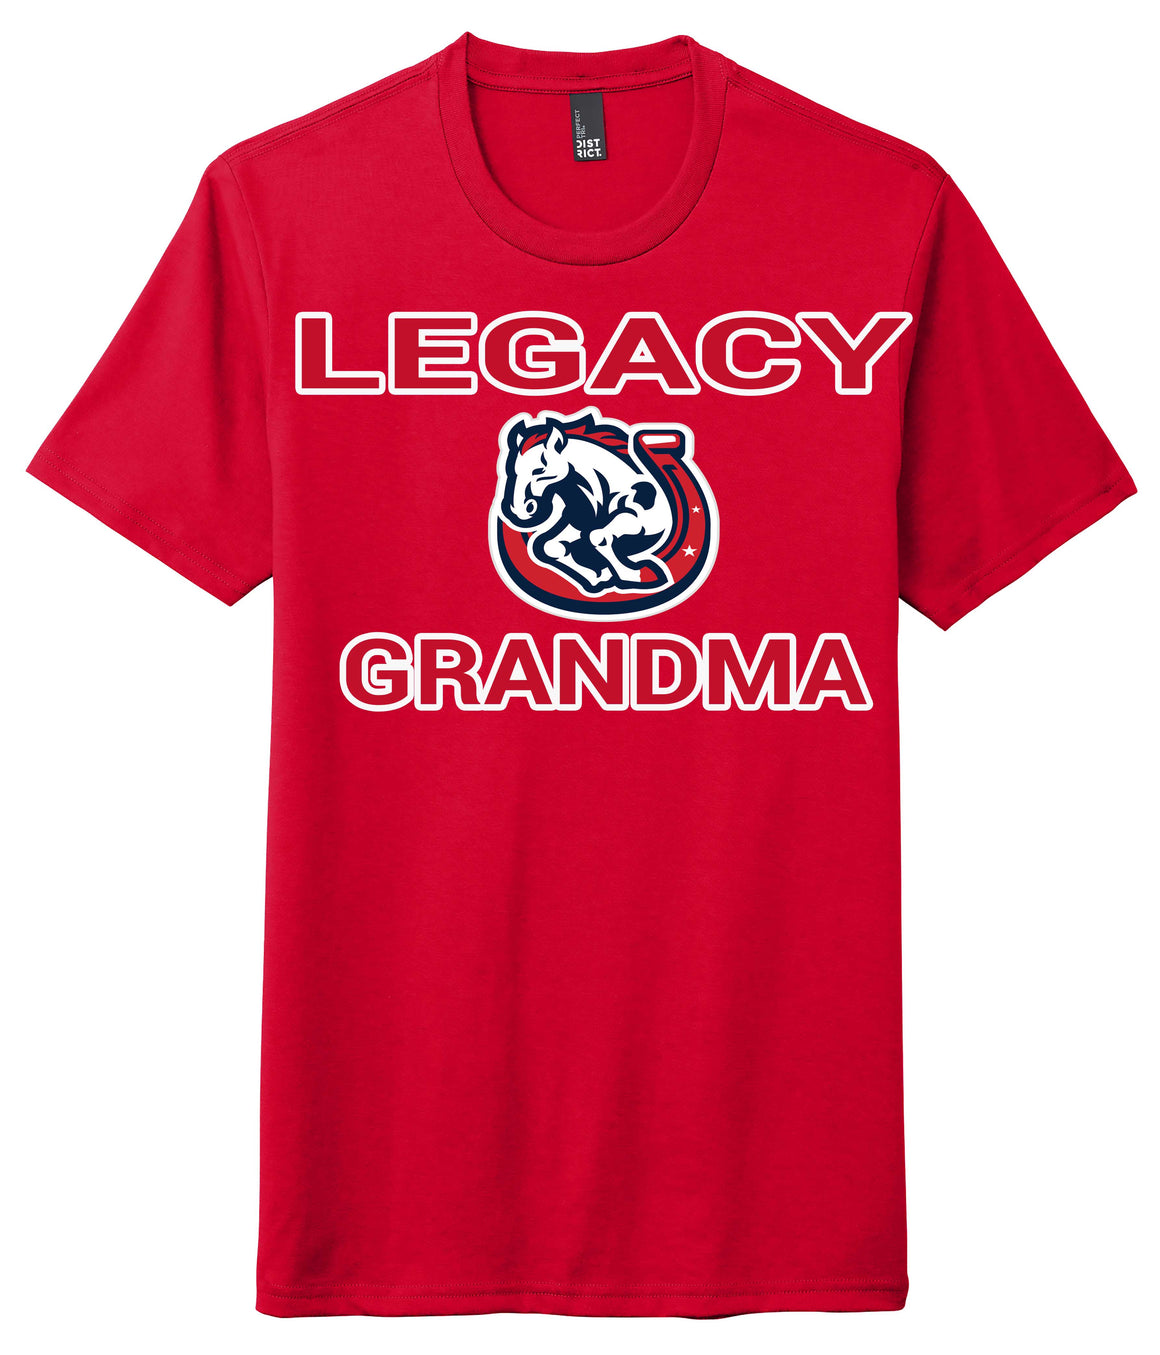 Legacy Traditional School West Surprise-Grandma Shirt